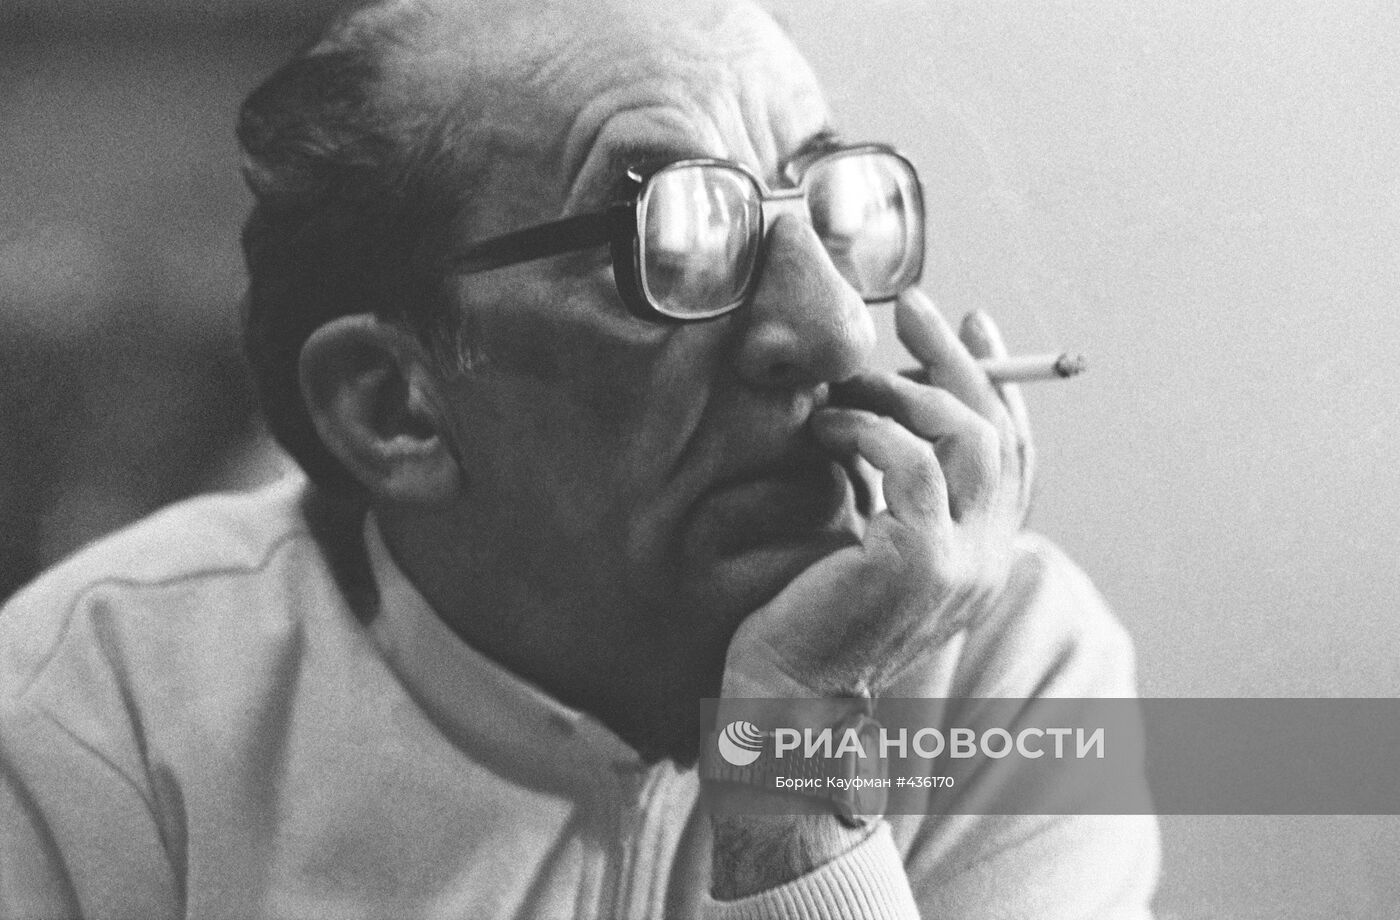 Народный артист СССР Георгий Александрович Товстоногов